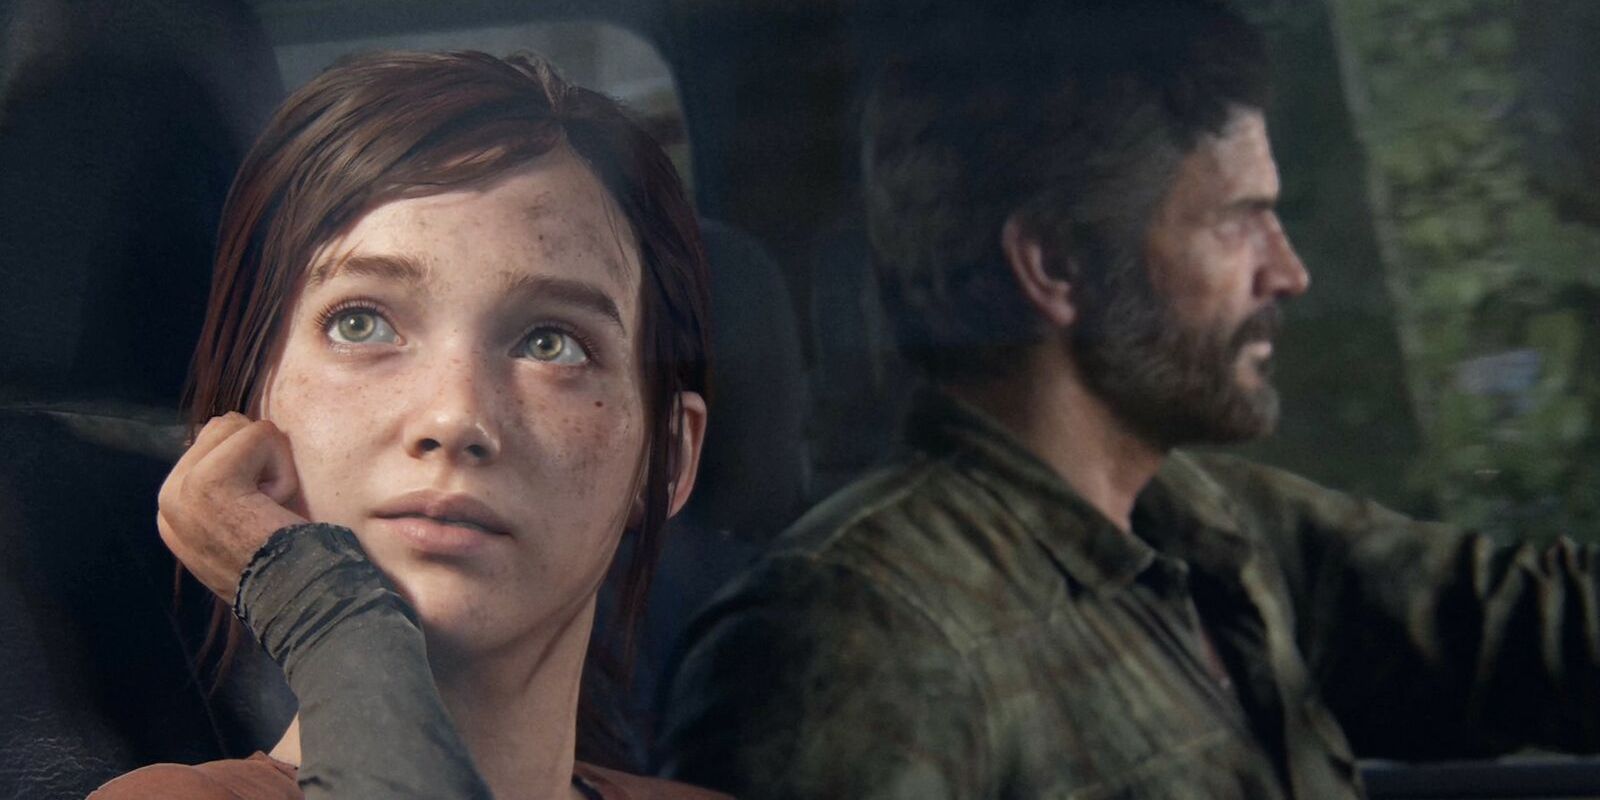 The Last Of Us: Ellie olha pela janela enquanto Joel dirige